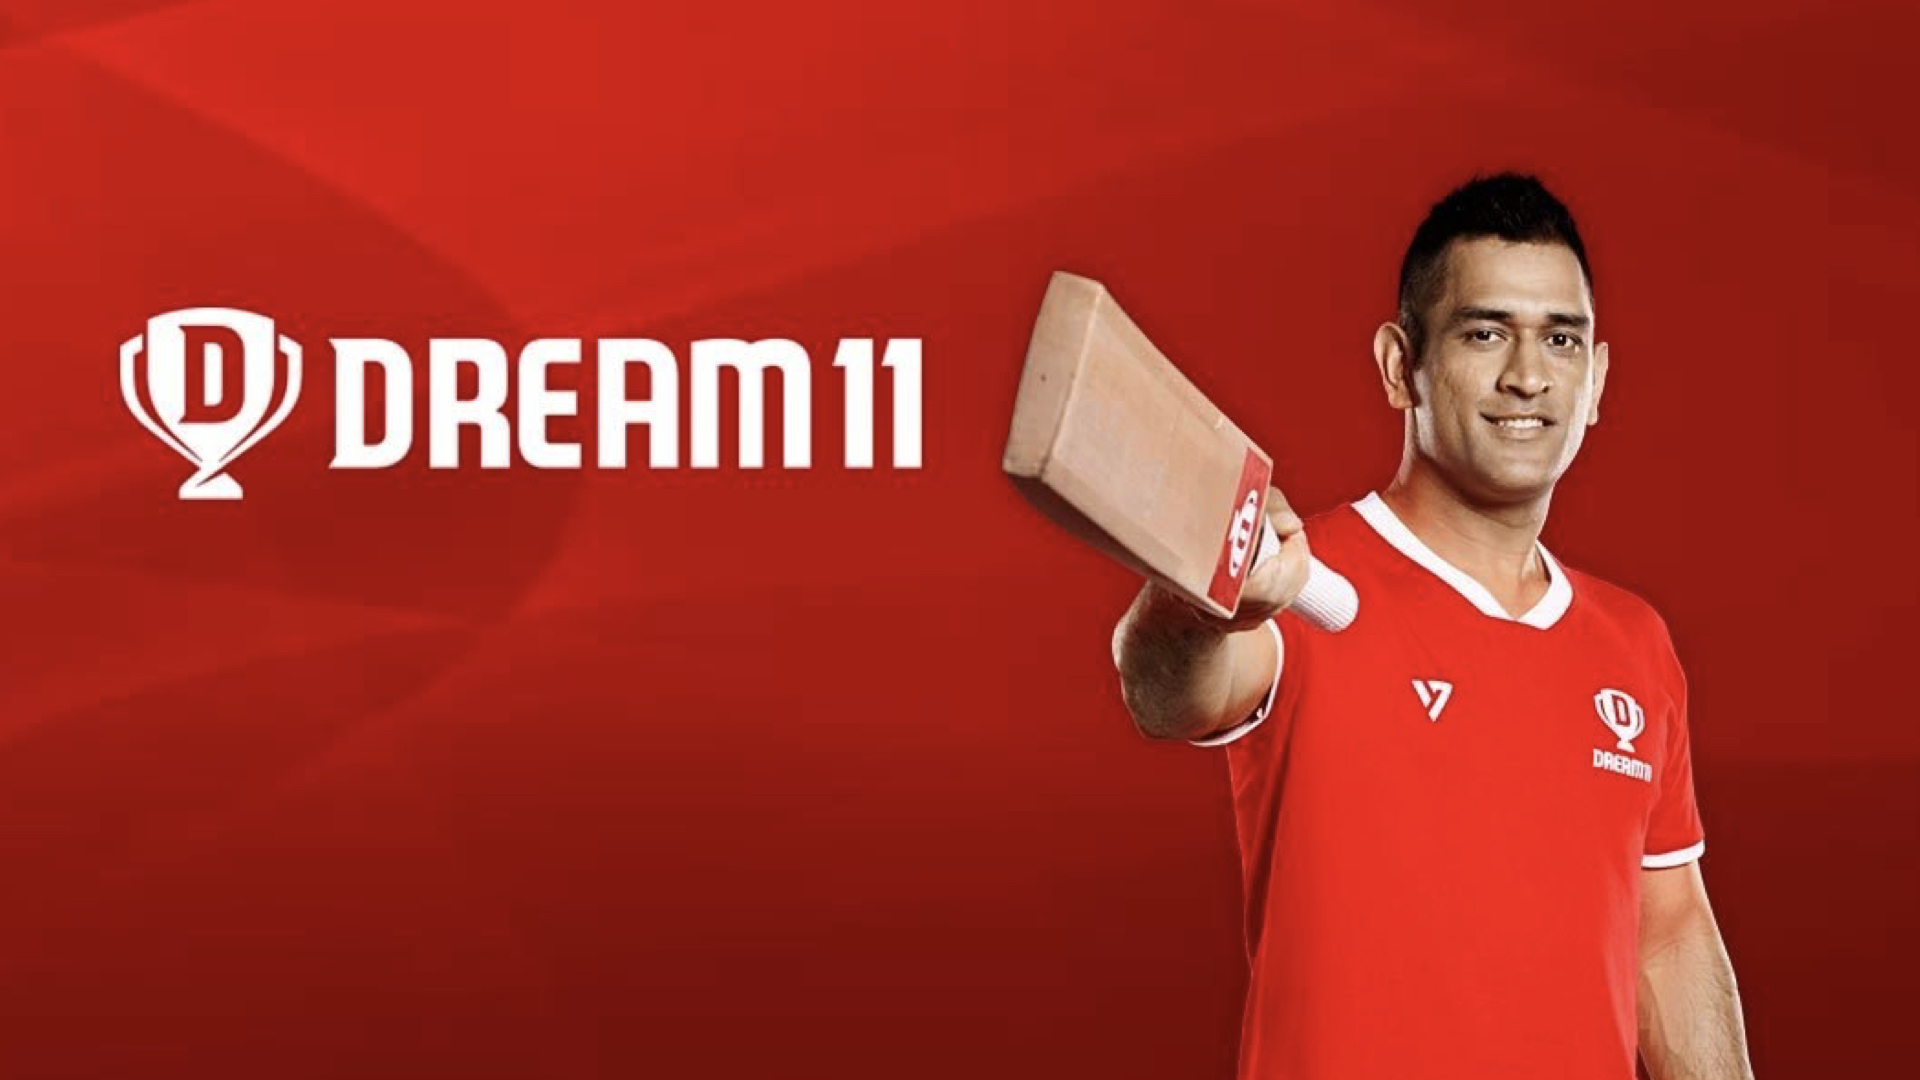 Dream11 becomes title sponsor for Indian Premier League cricket 